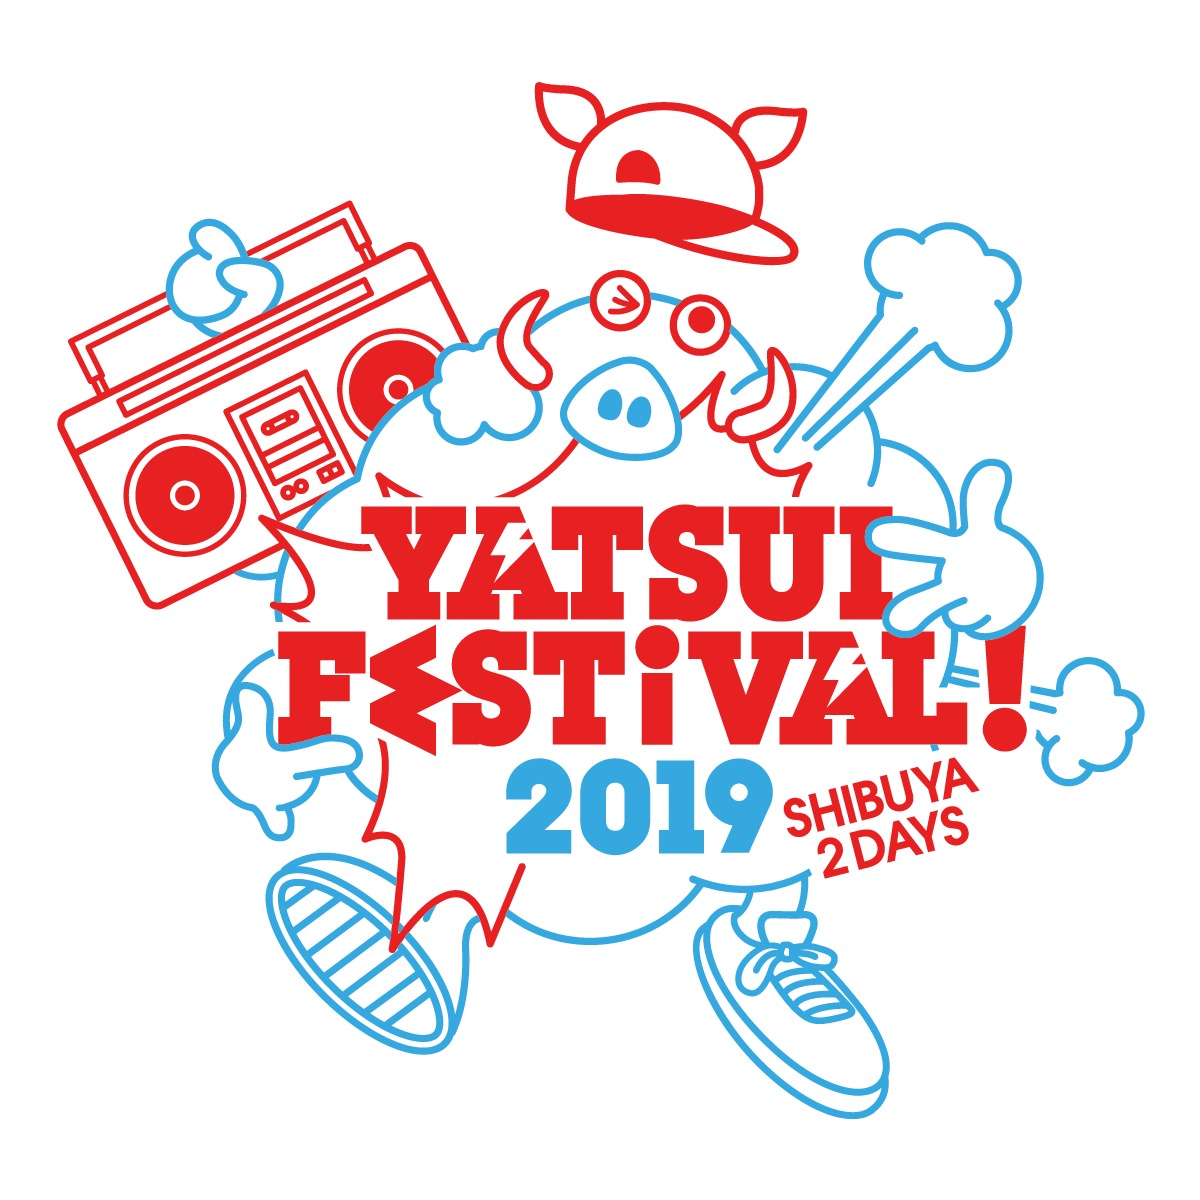 YATSUI FESTIVAL! 2019